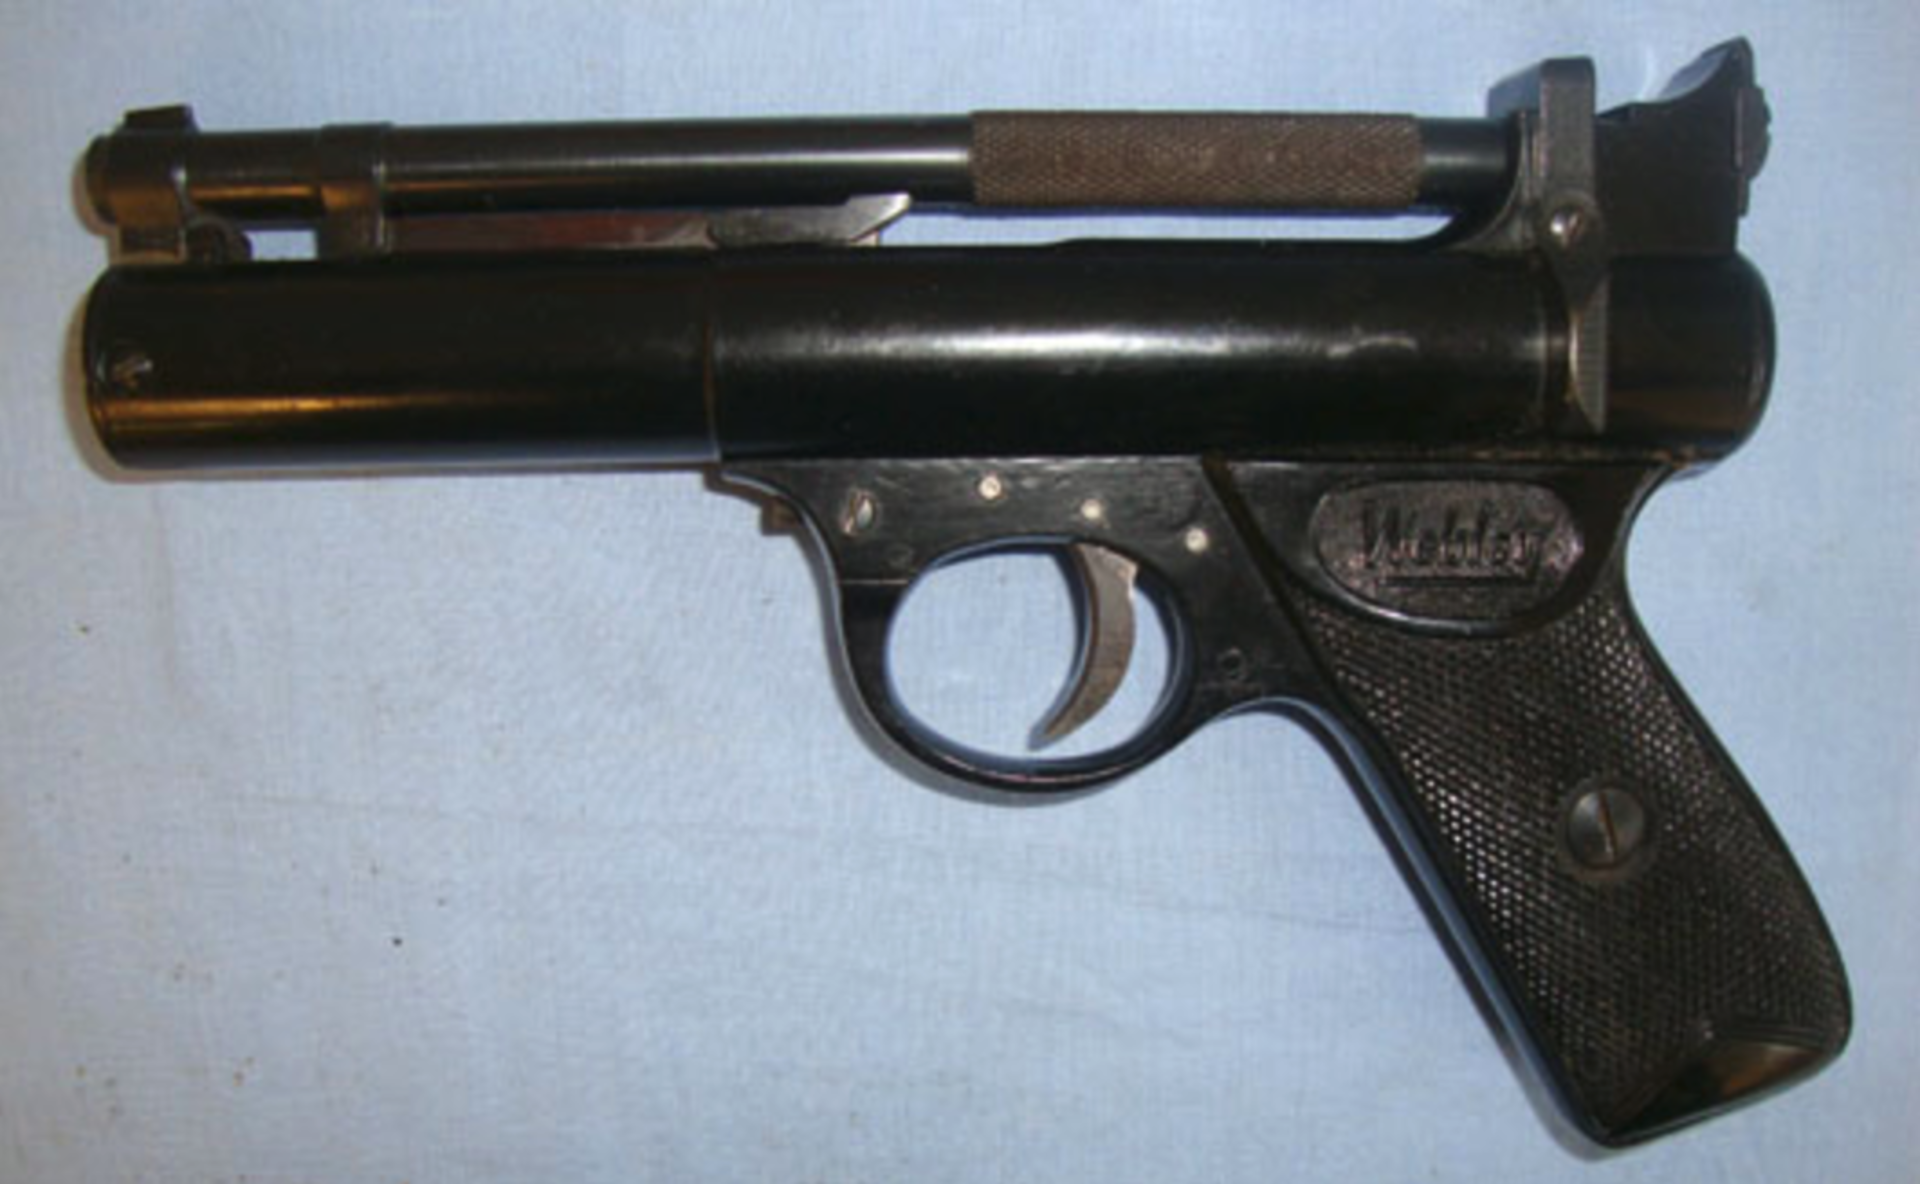 Boxed, 1974 Webley Premier 'E' Series .22 Calibre Air Pistol - Image 2 of 3